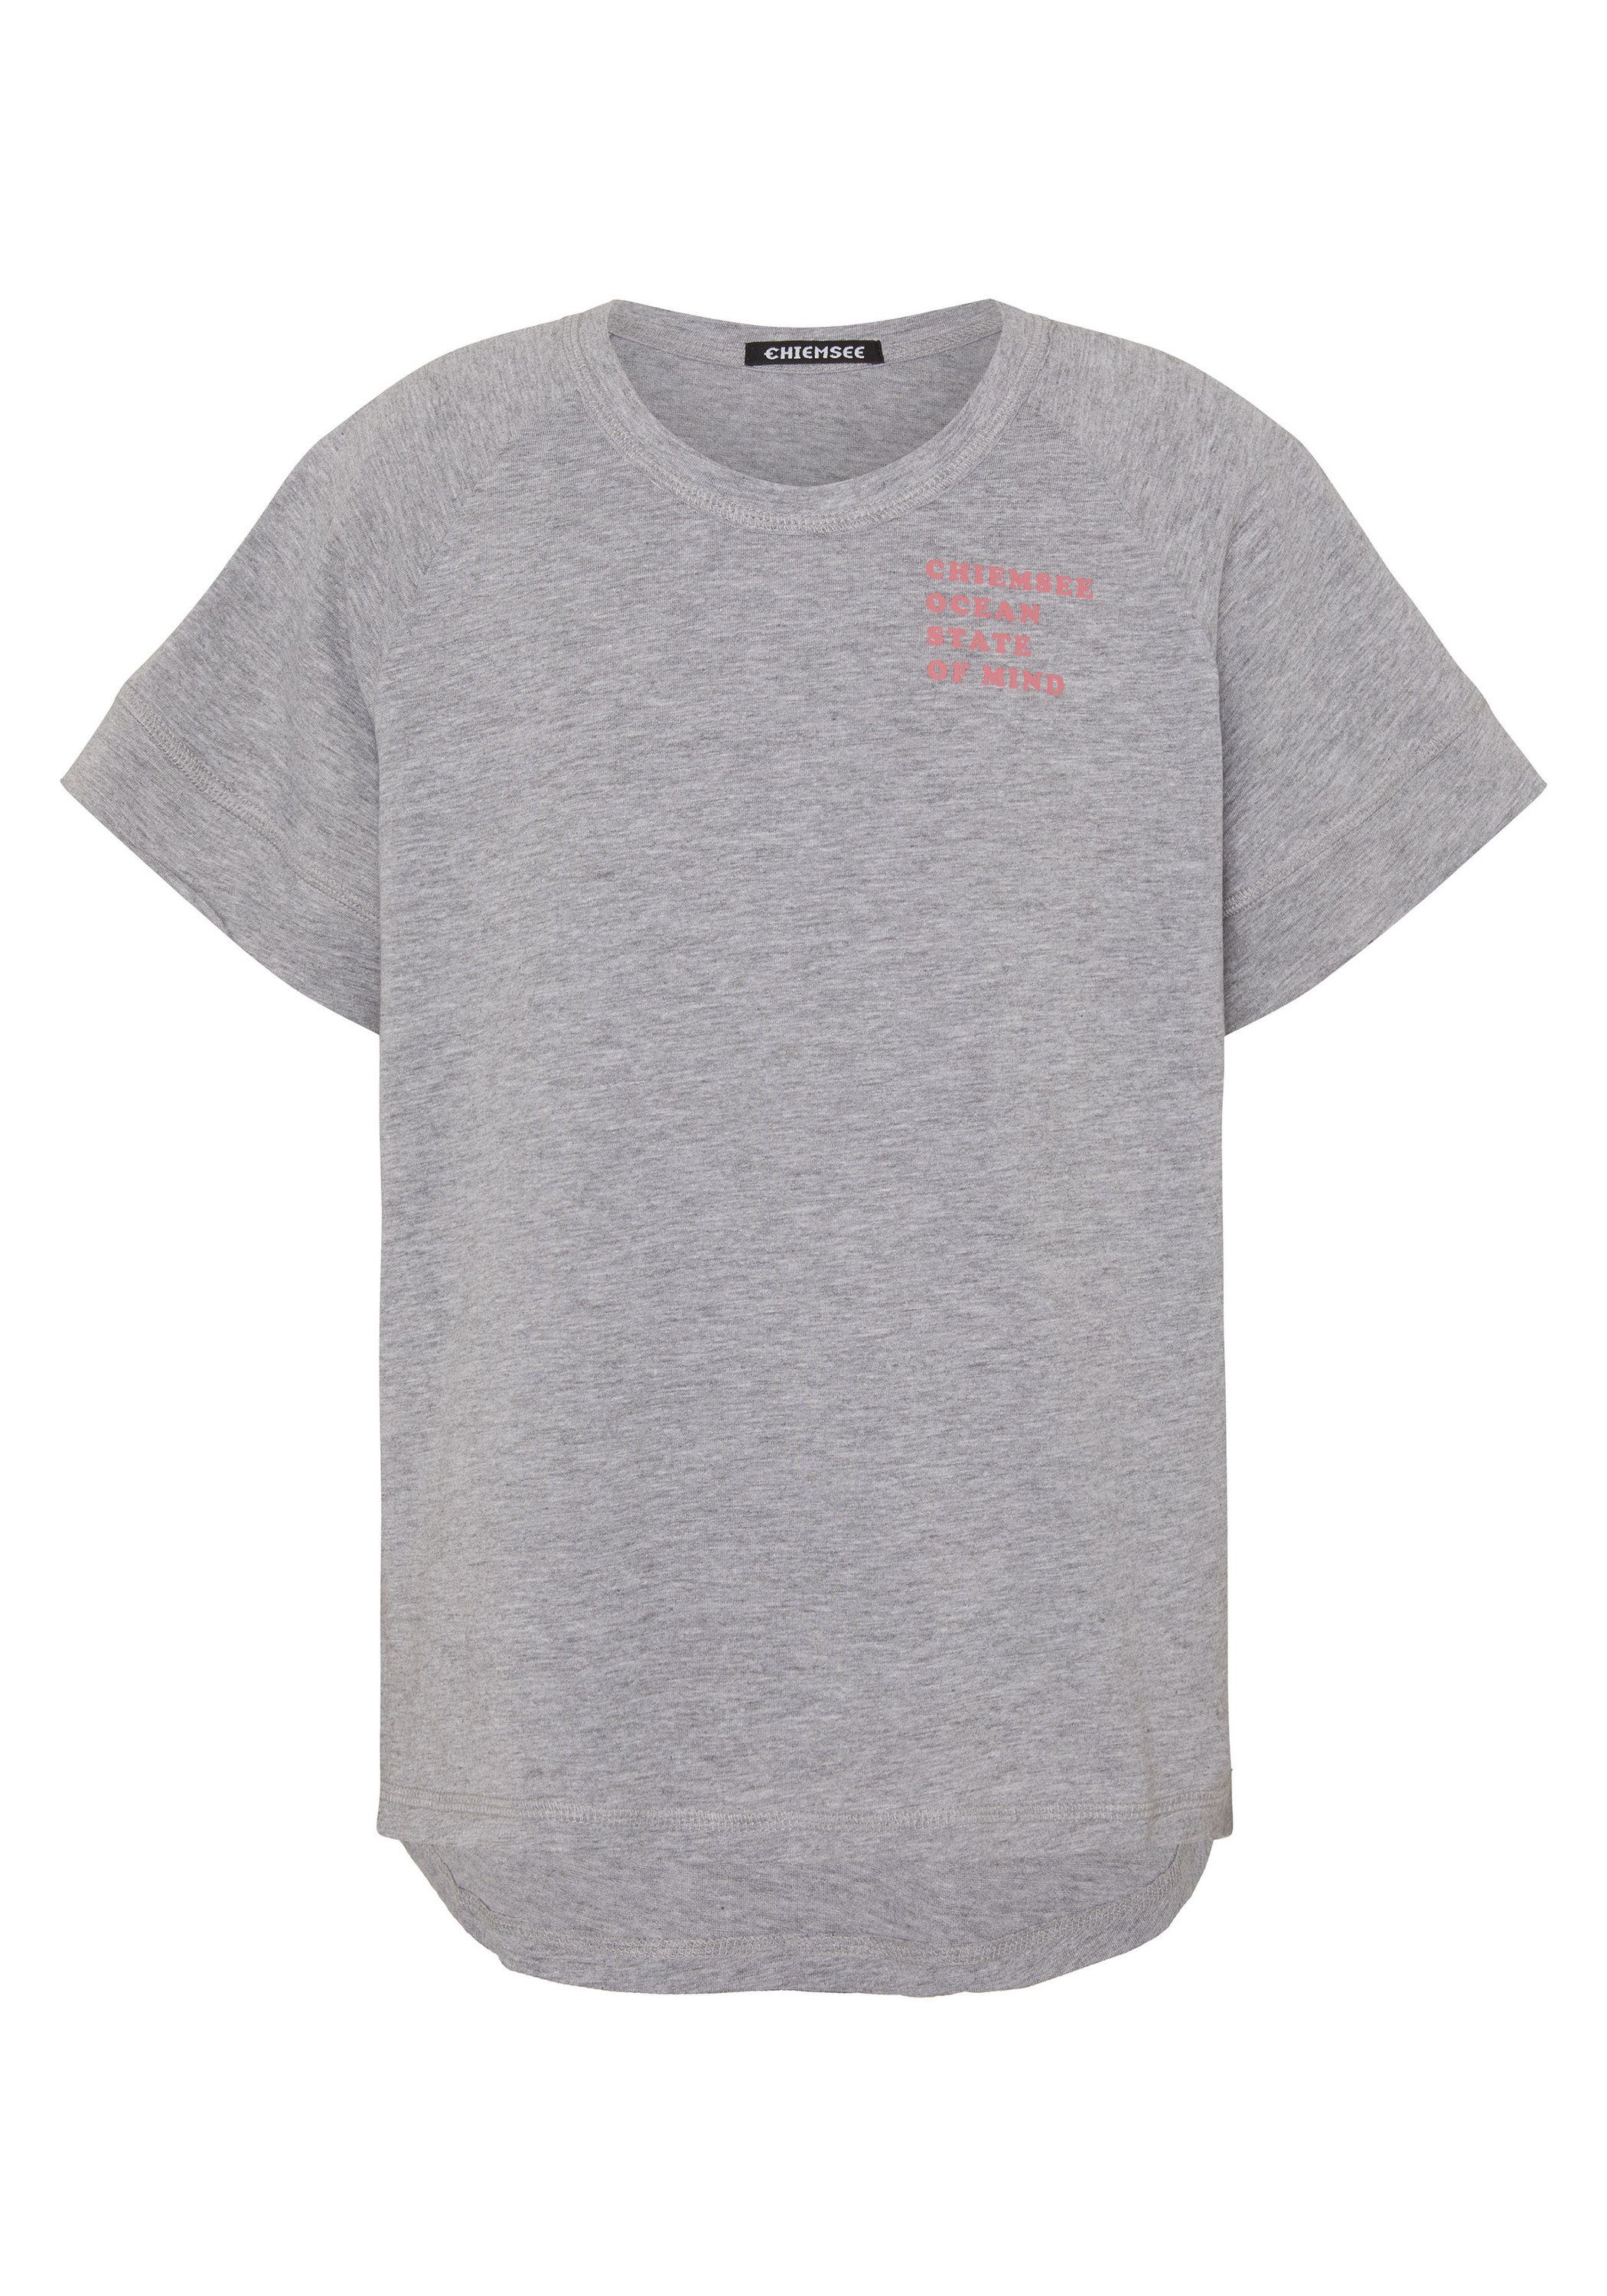 Shirt 1 aus 17-4402M Jersey Neutral Gray mit Print-Shirt Print Melange Chiemsee